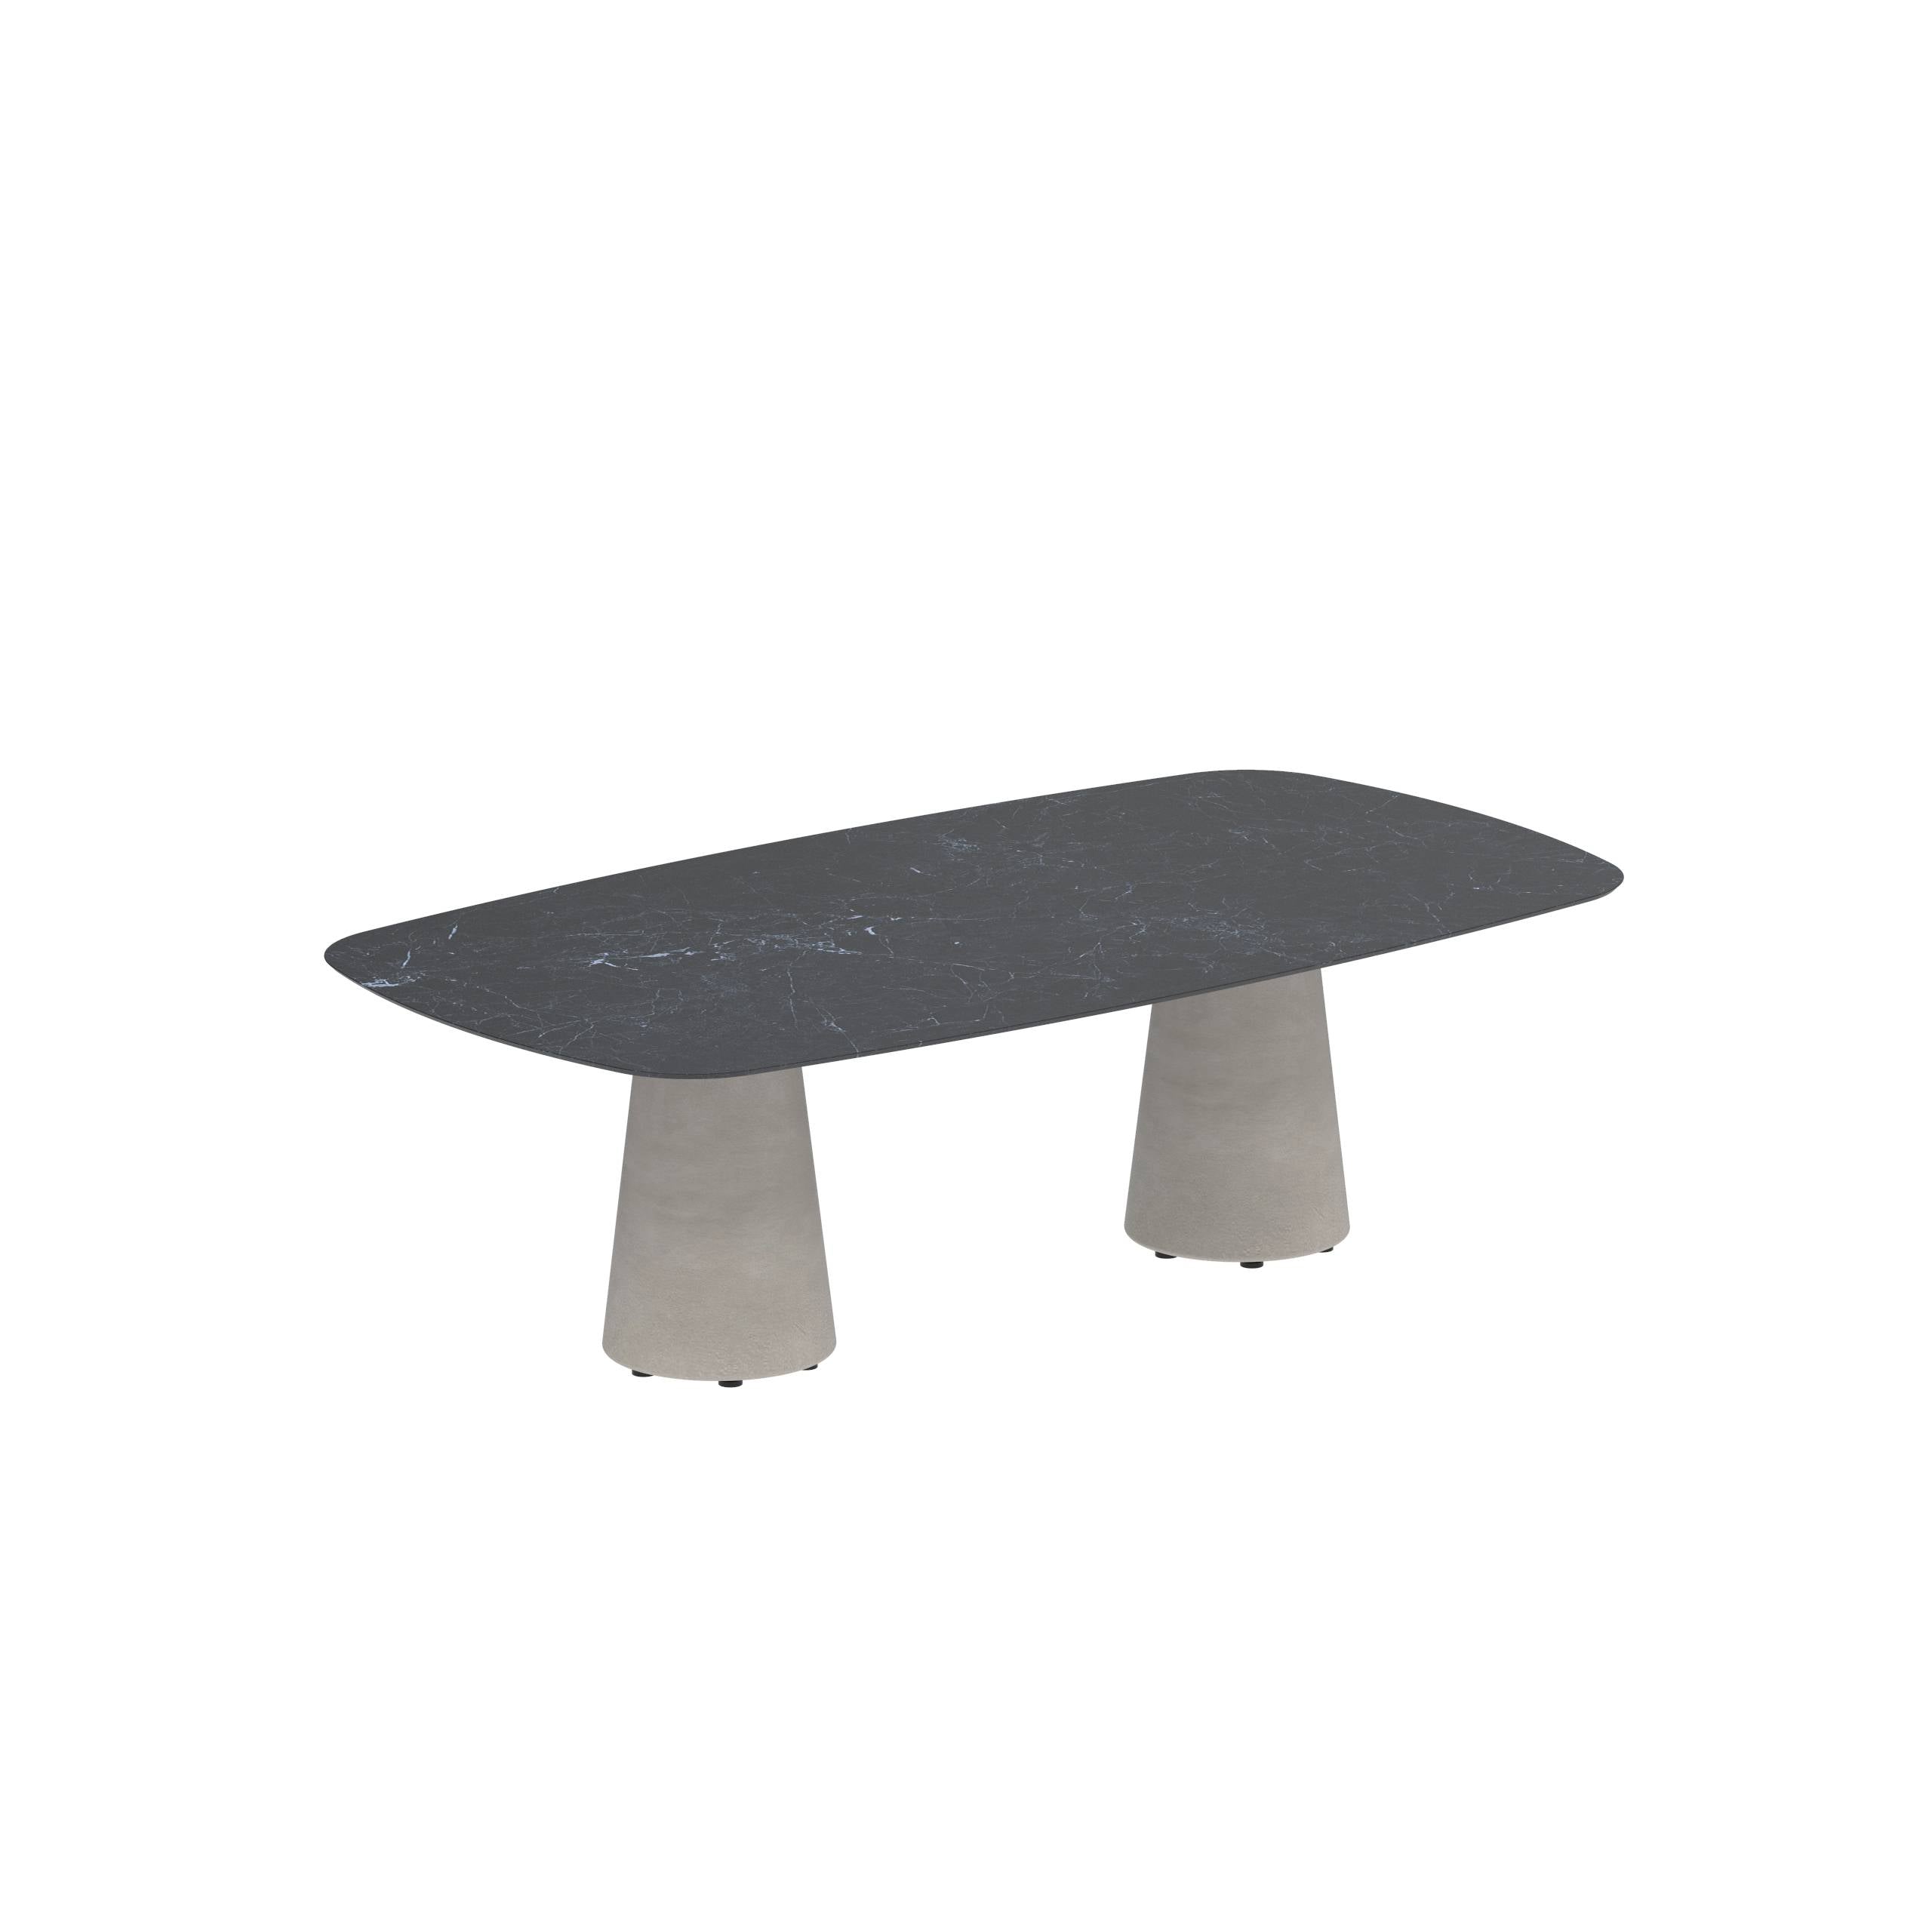 Conix Table 220x120 Cm Low Dining Legs Concrete Cement Grey - Table Top Ceramic Nero Marquina